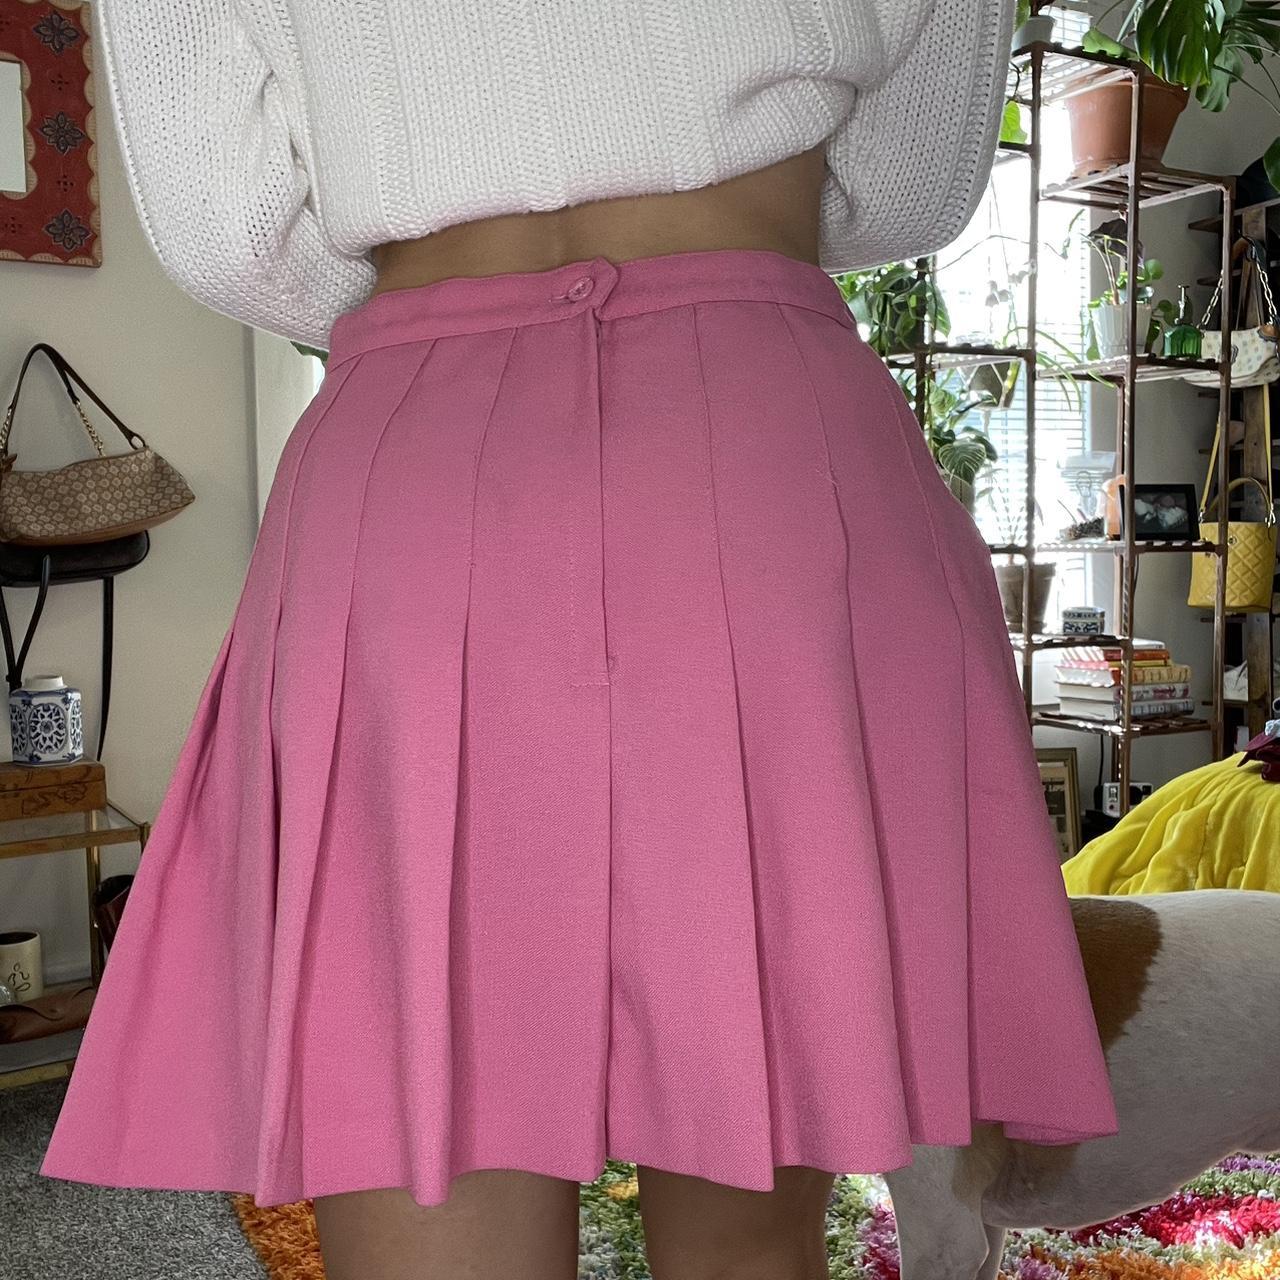 Vintage Tennis Skirt Cute For Summer Or Fall Depop 